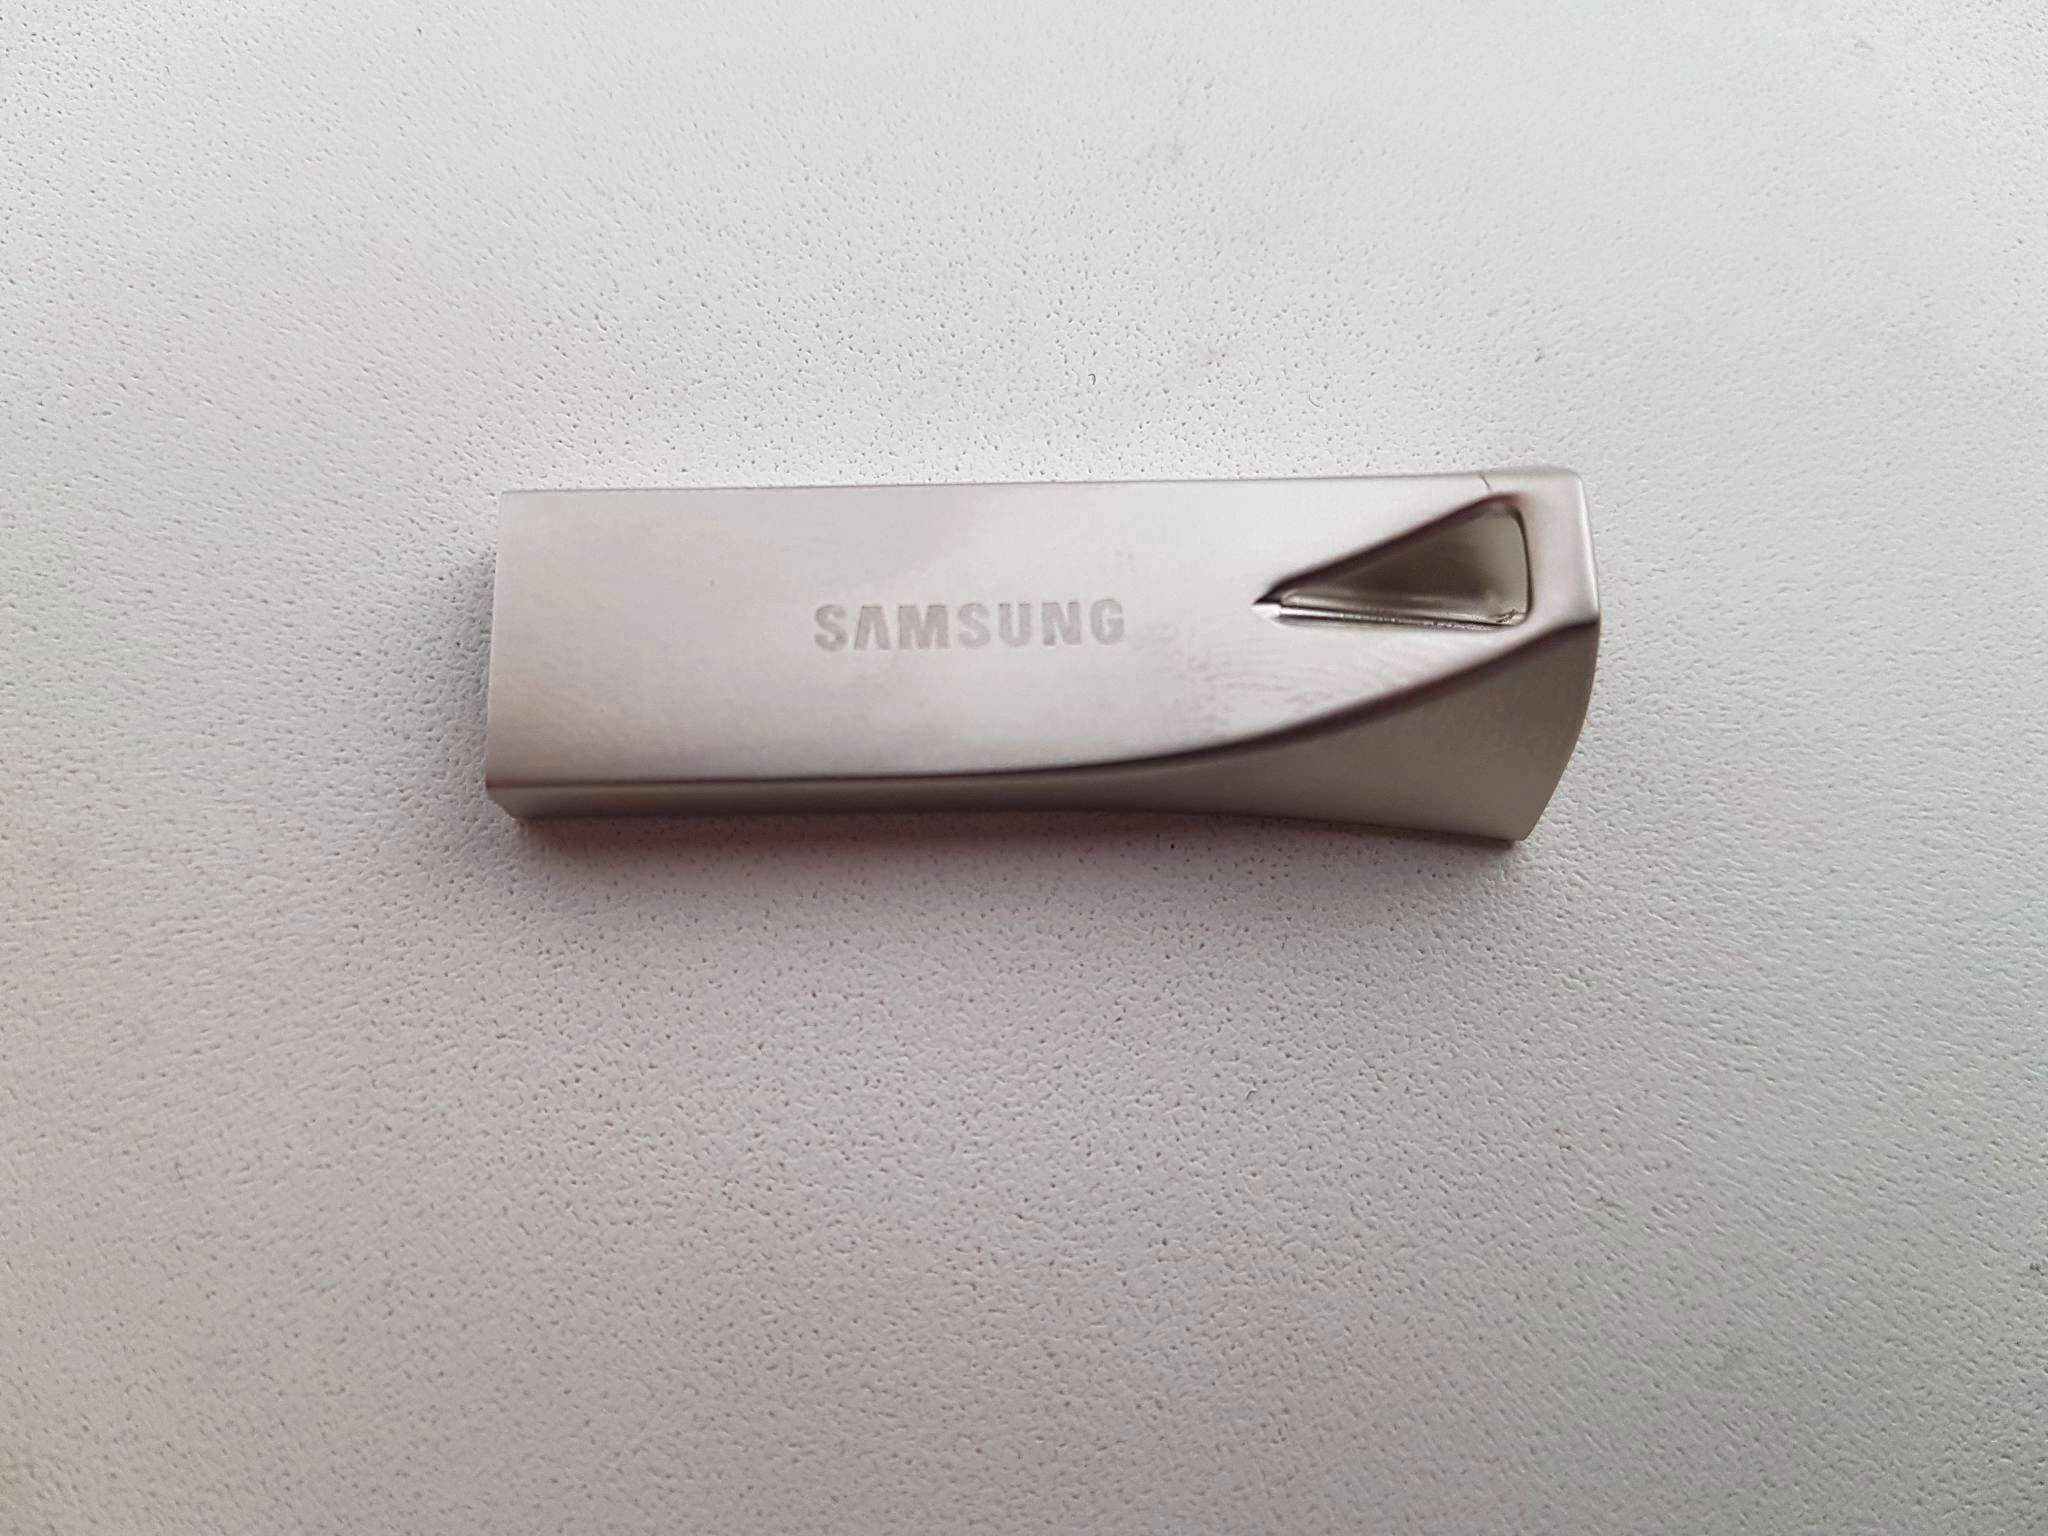 Samsung Bar Plus Usb 3.1 64gb